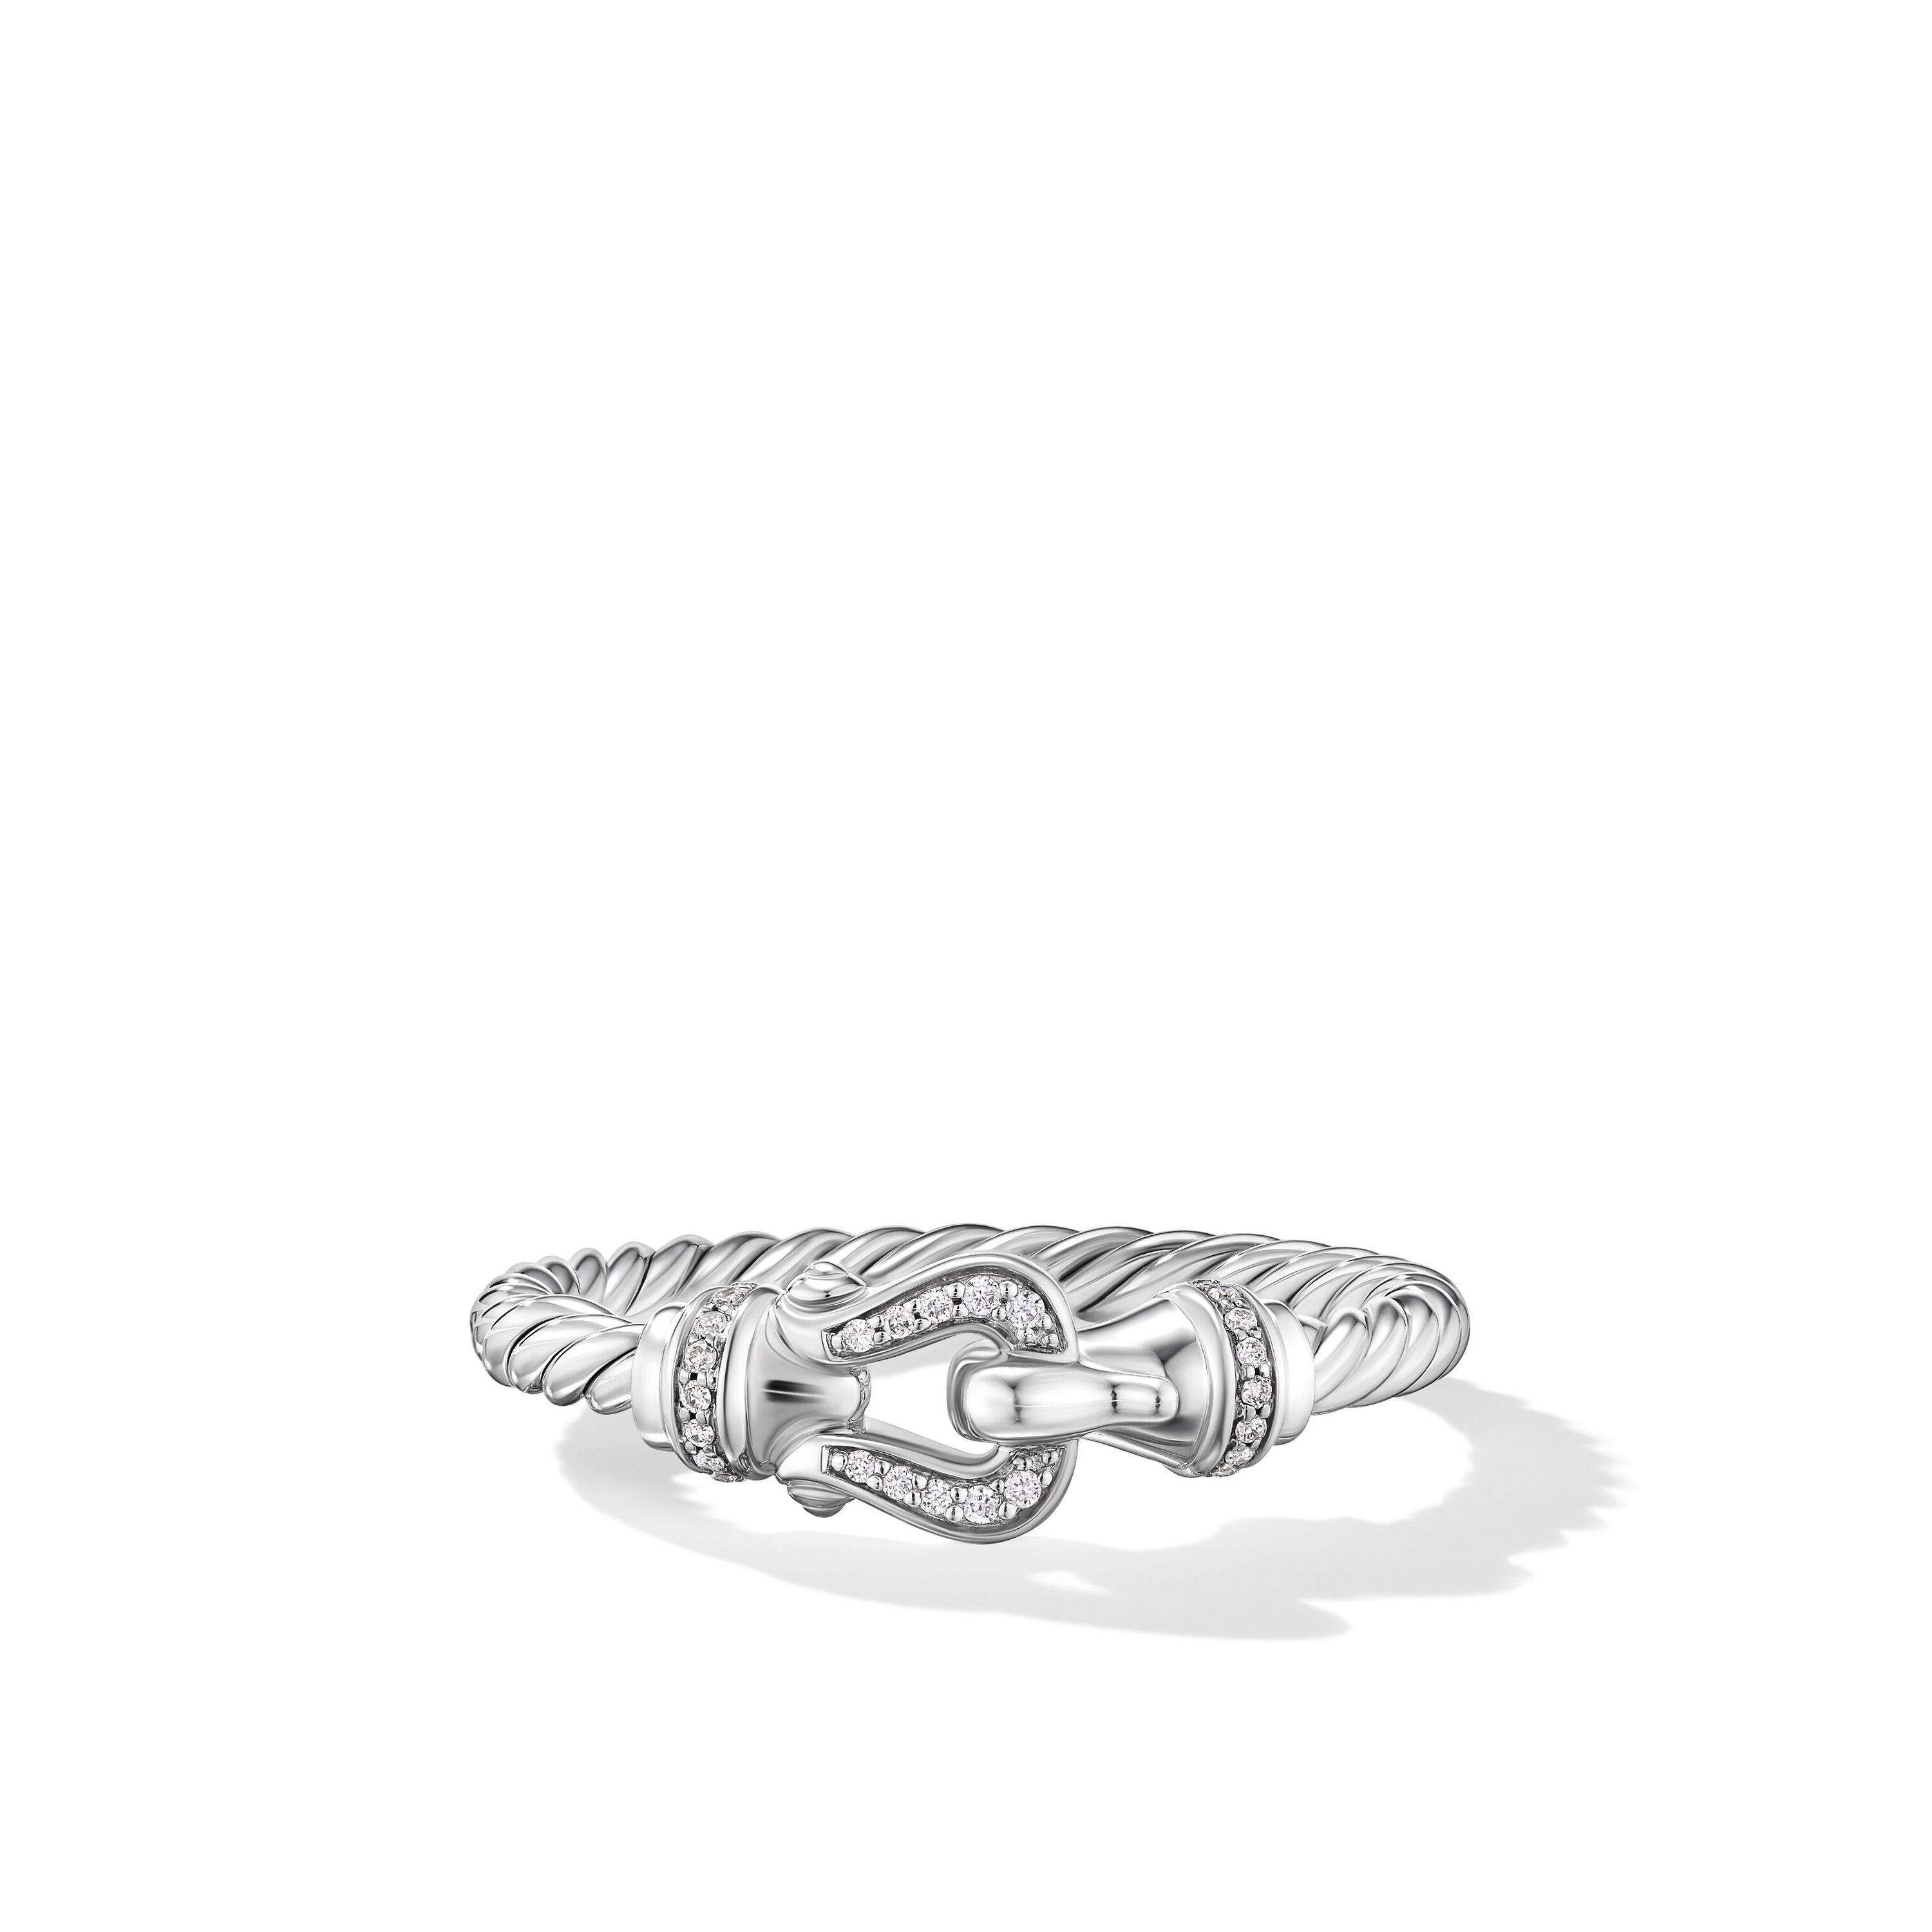 David Yurman Sterling Silver Petite Buckle Ring with Diamonds, Size 6